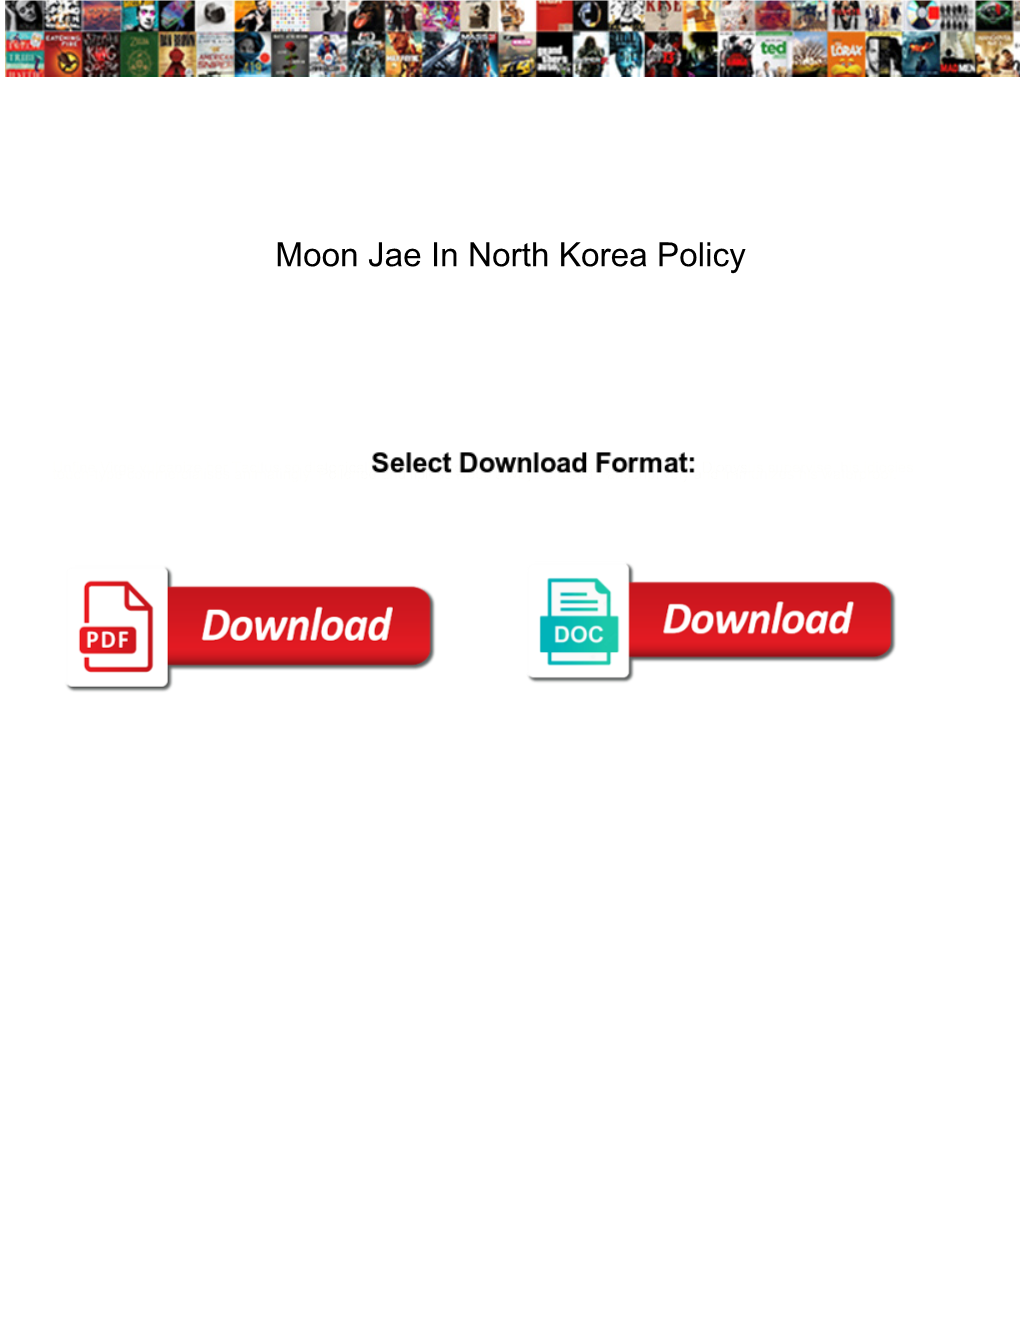 Moon Jae in North Korea Policy